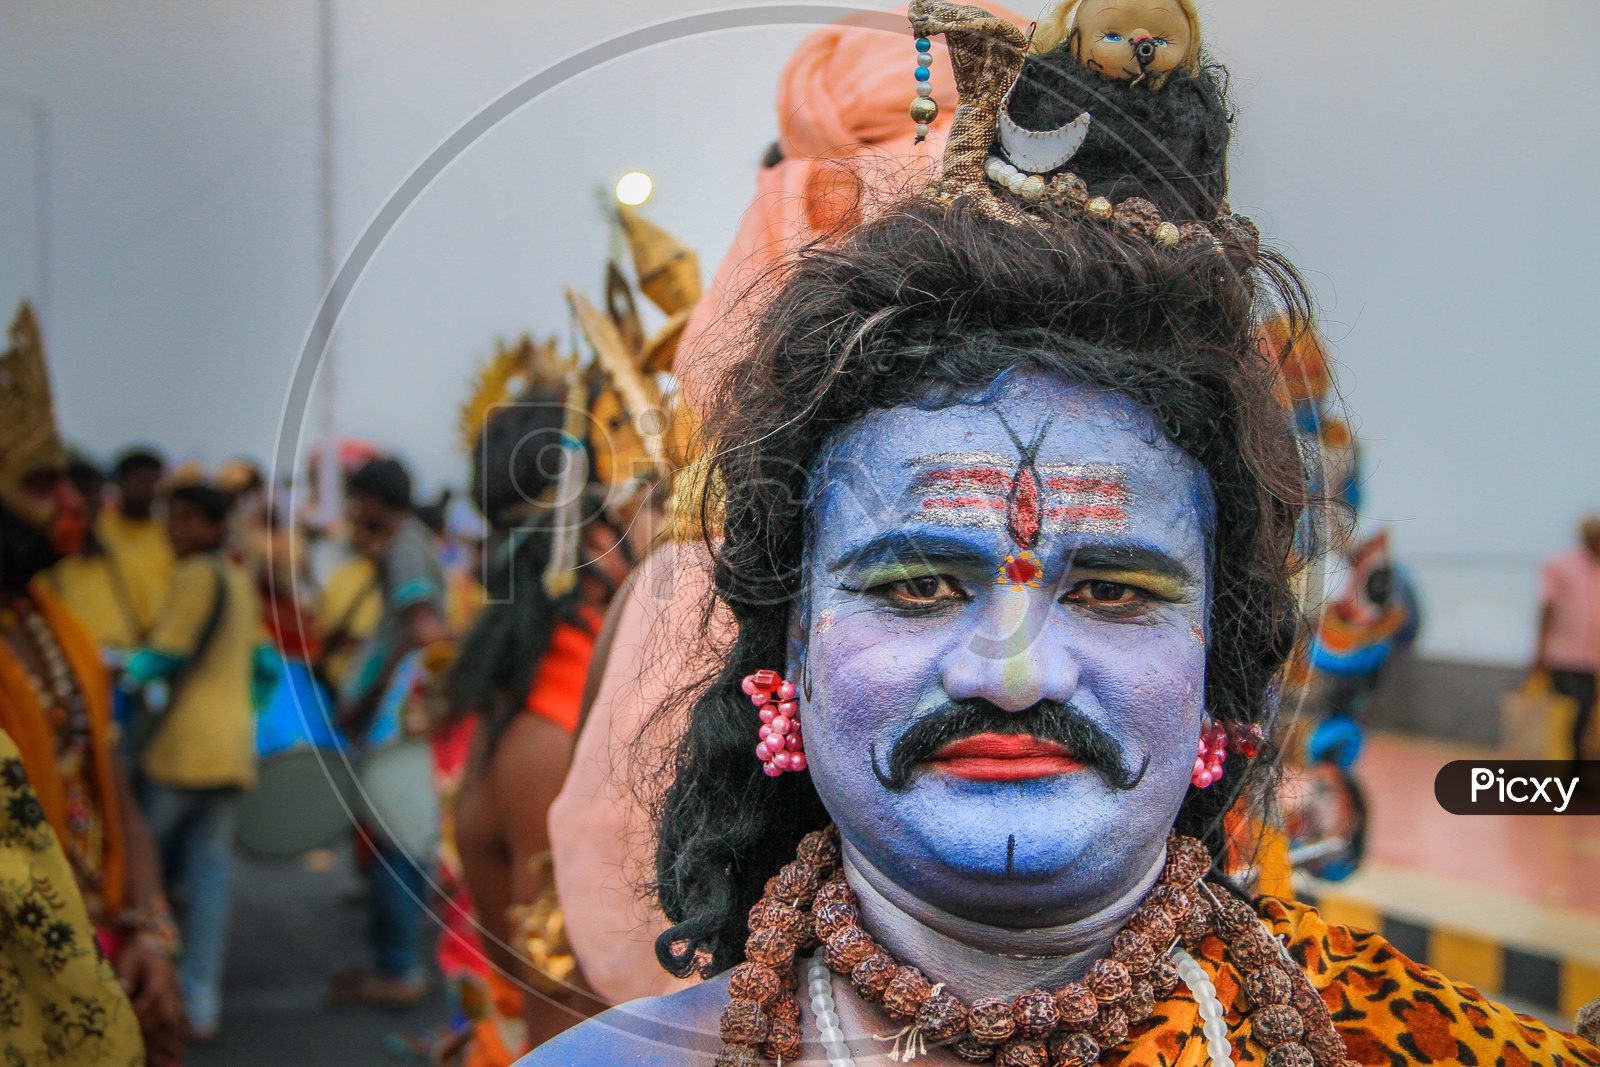 An artist got dressed like Lord Shiva